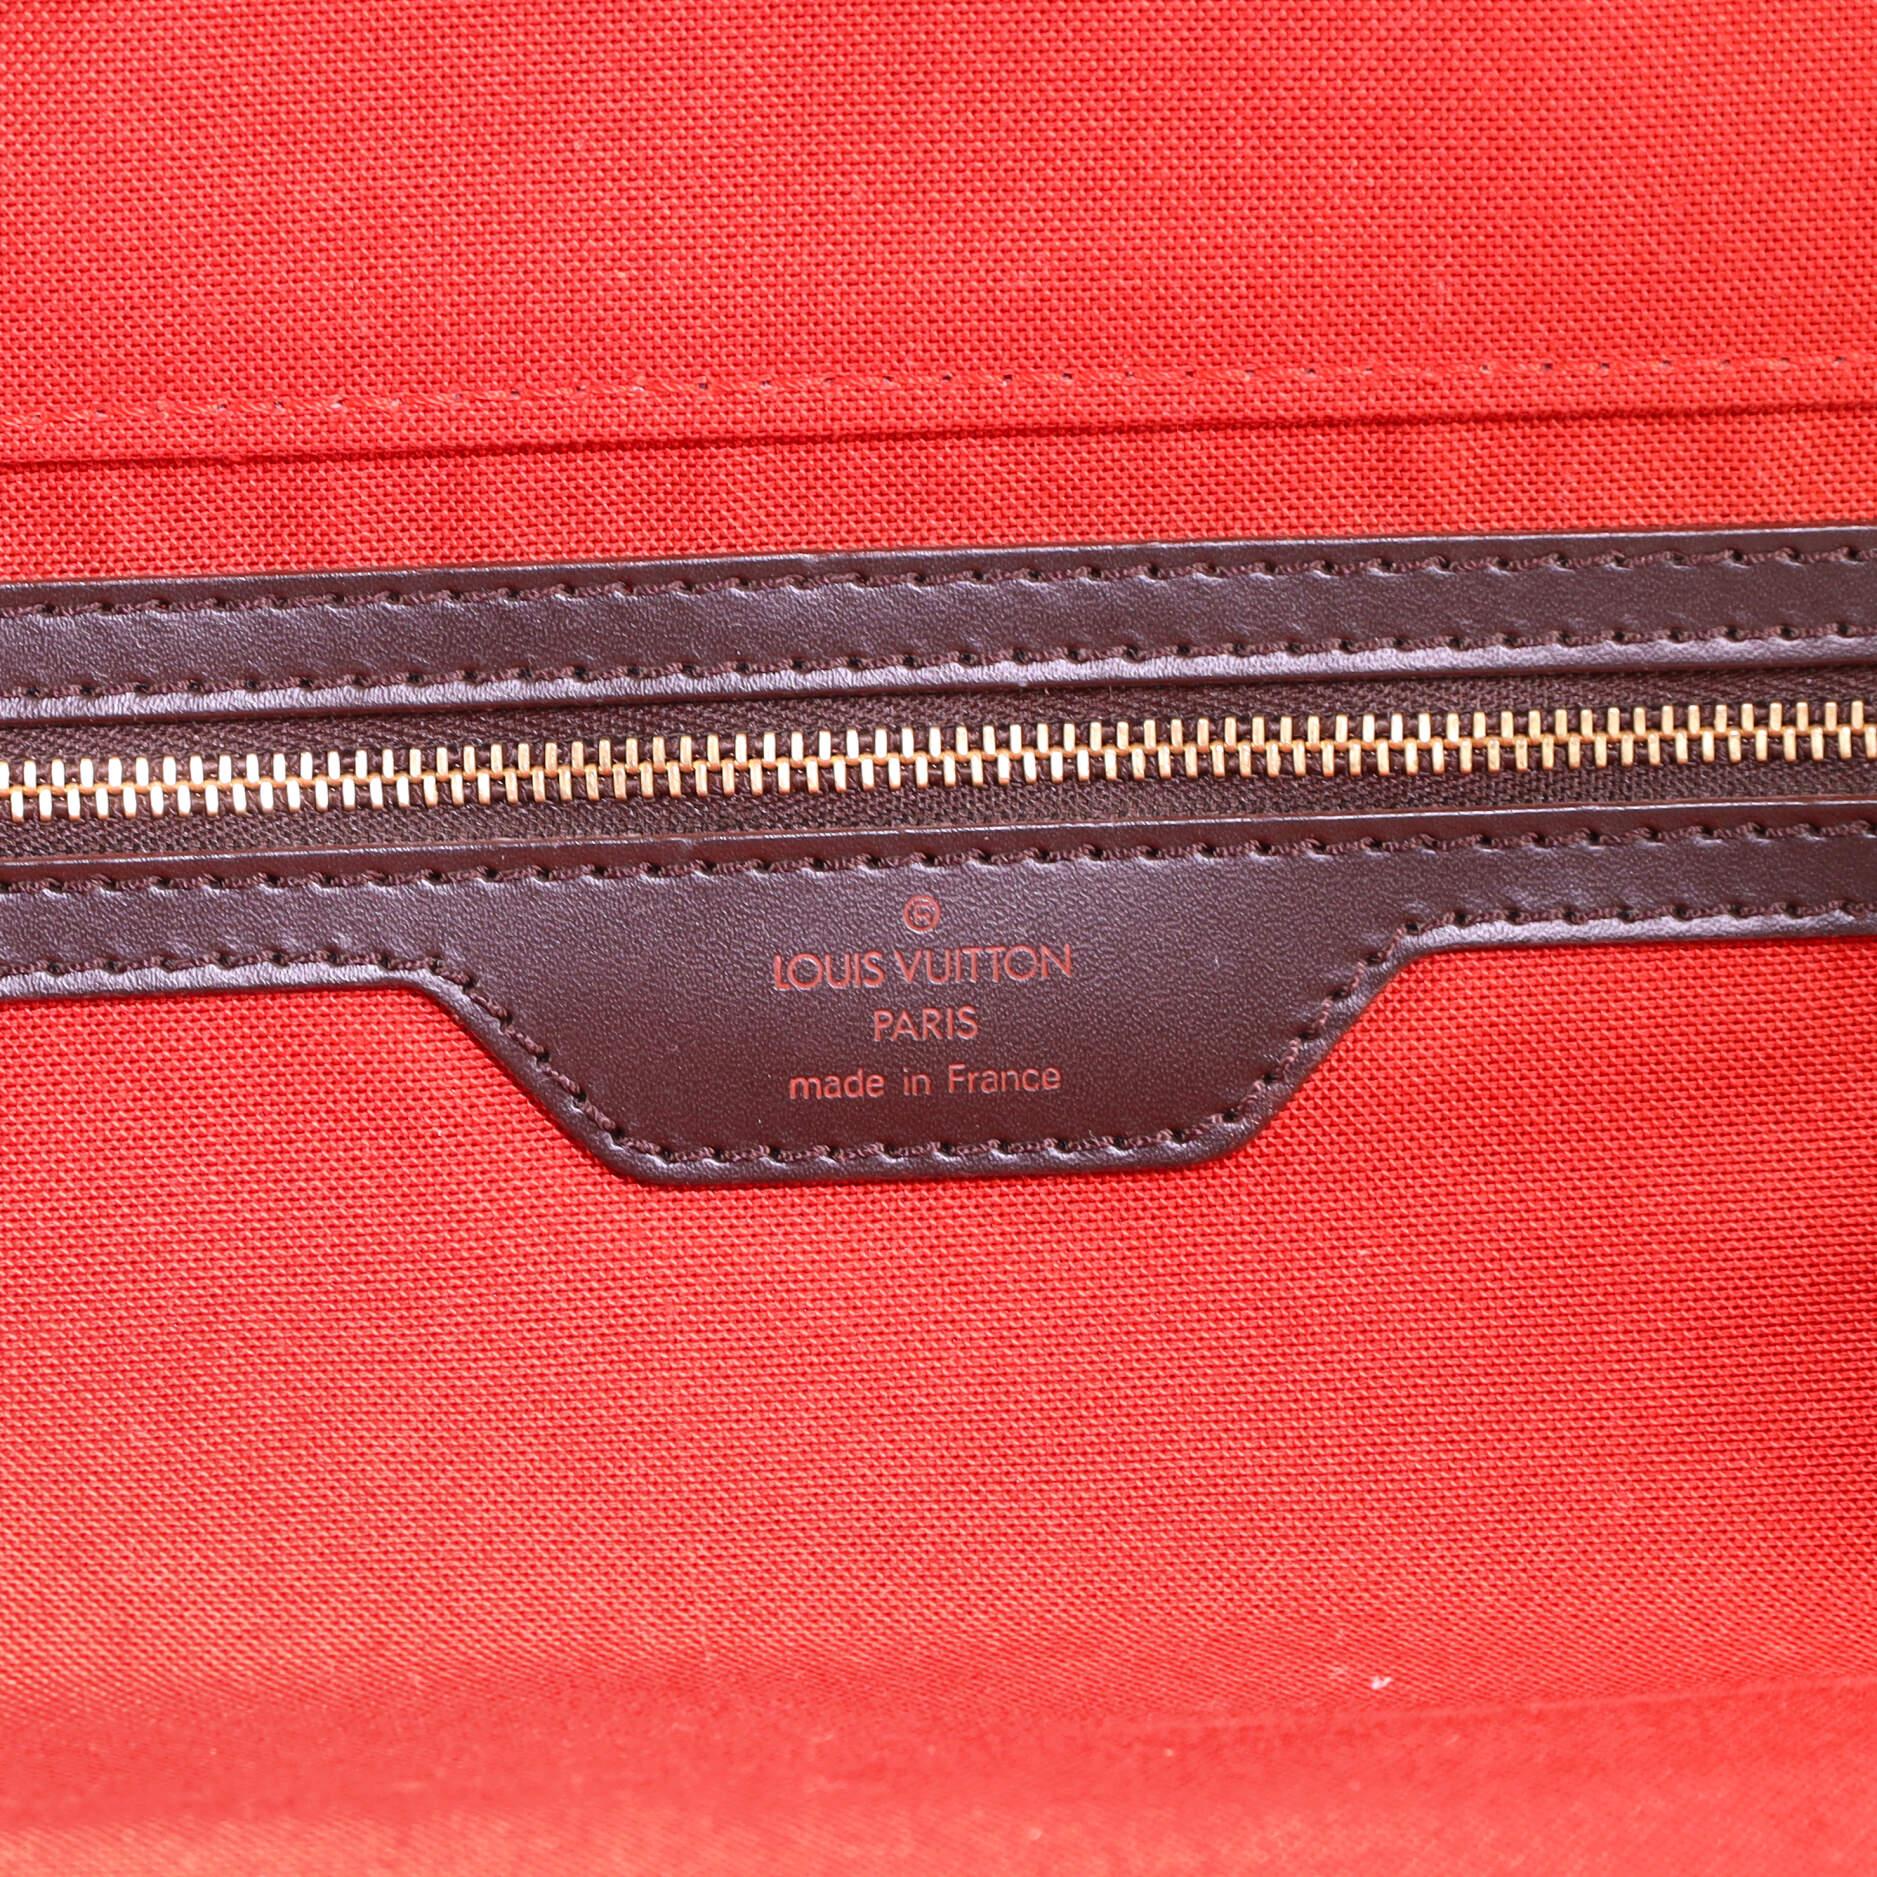 Louis Vuitton Greenwich Travel Bag Damier PM 2